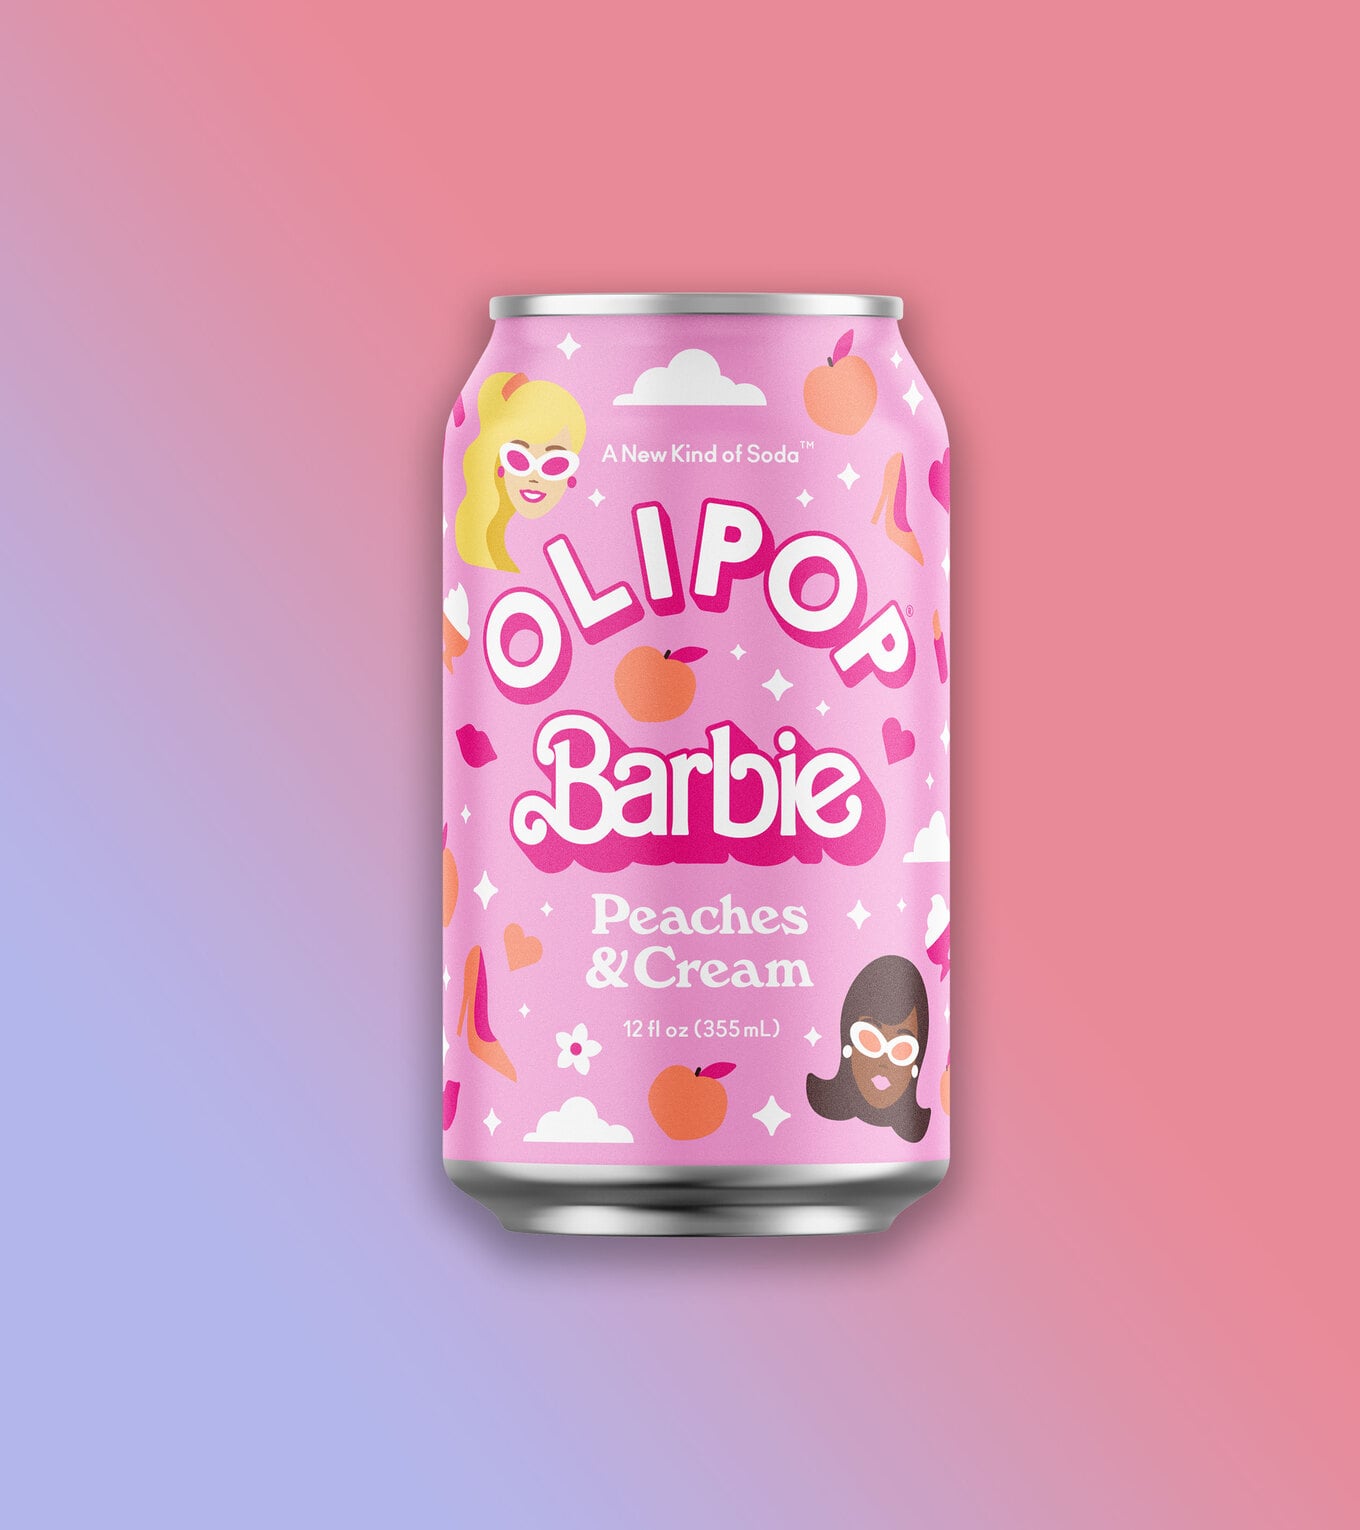 BarbieOlipop